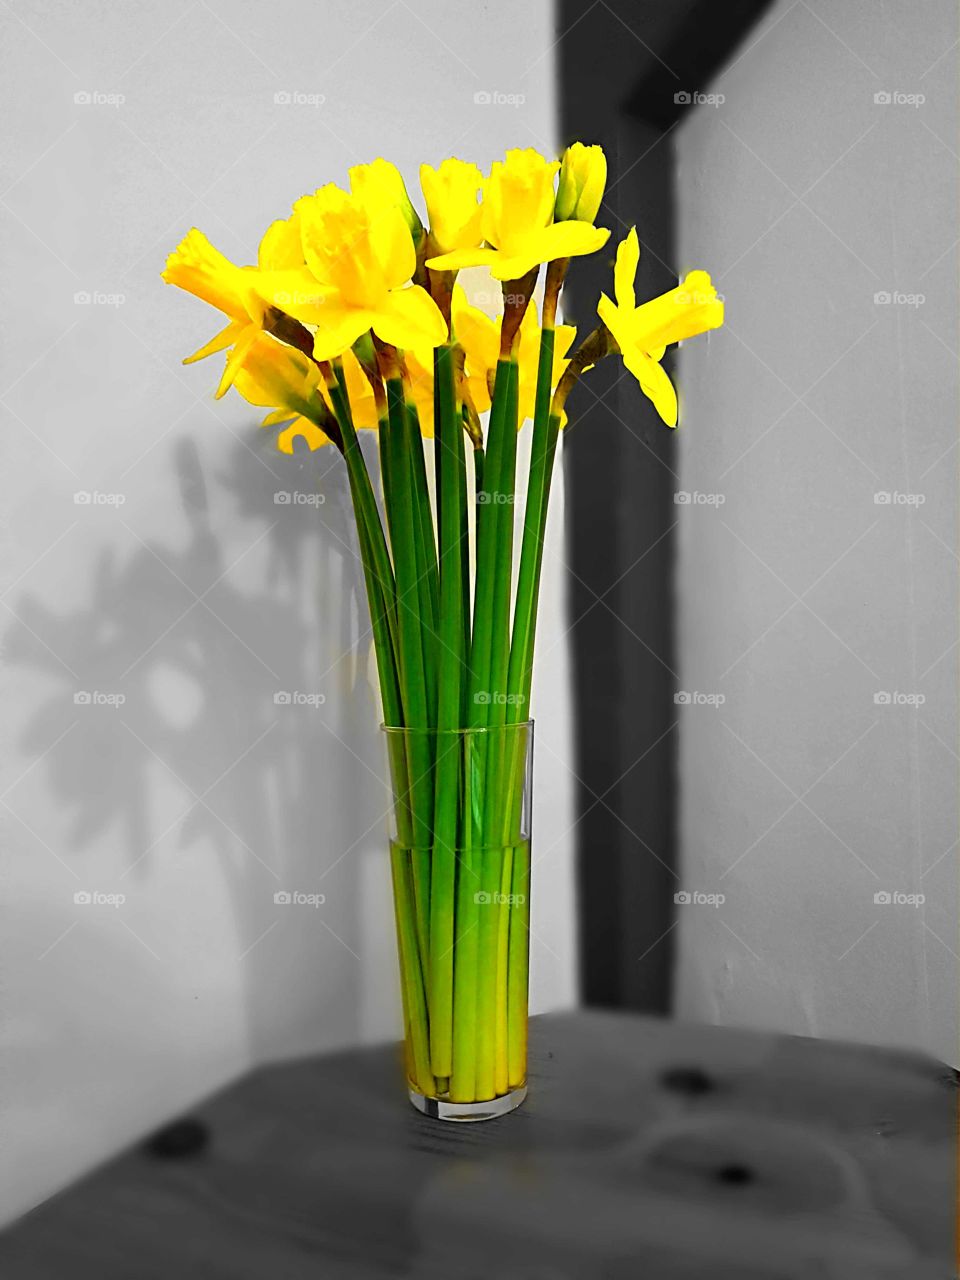 neon daffodils